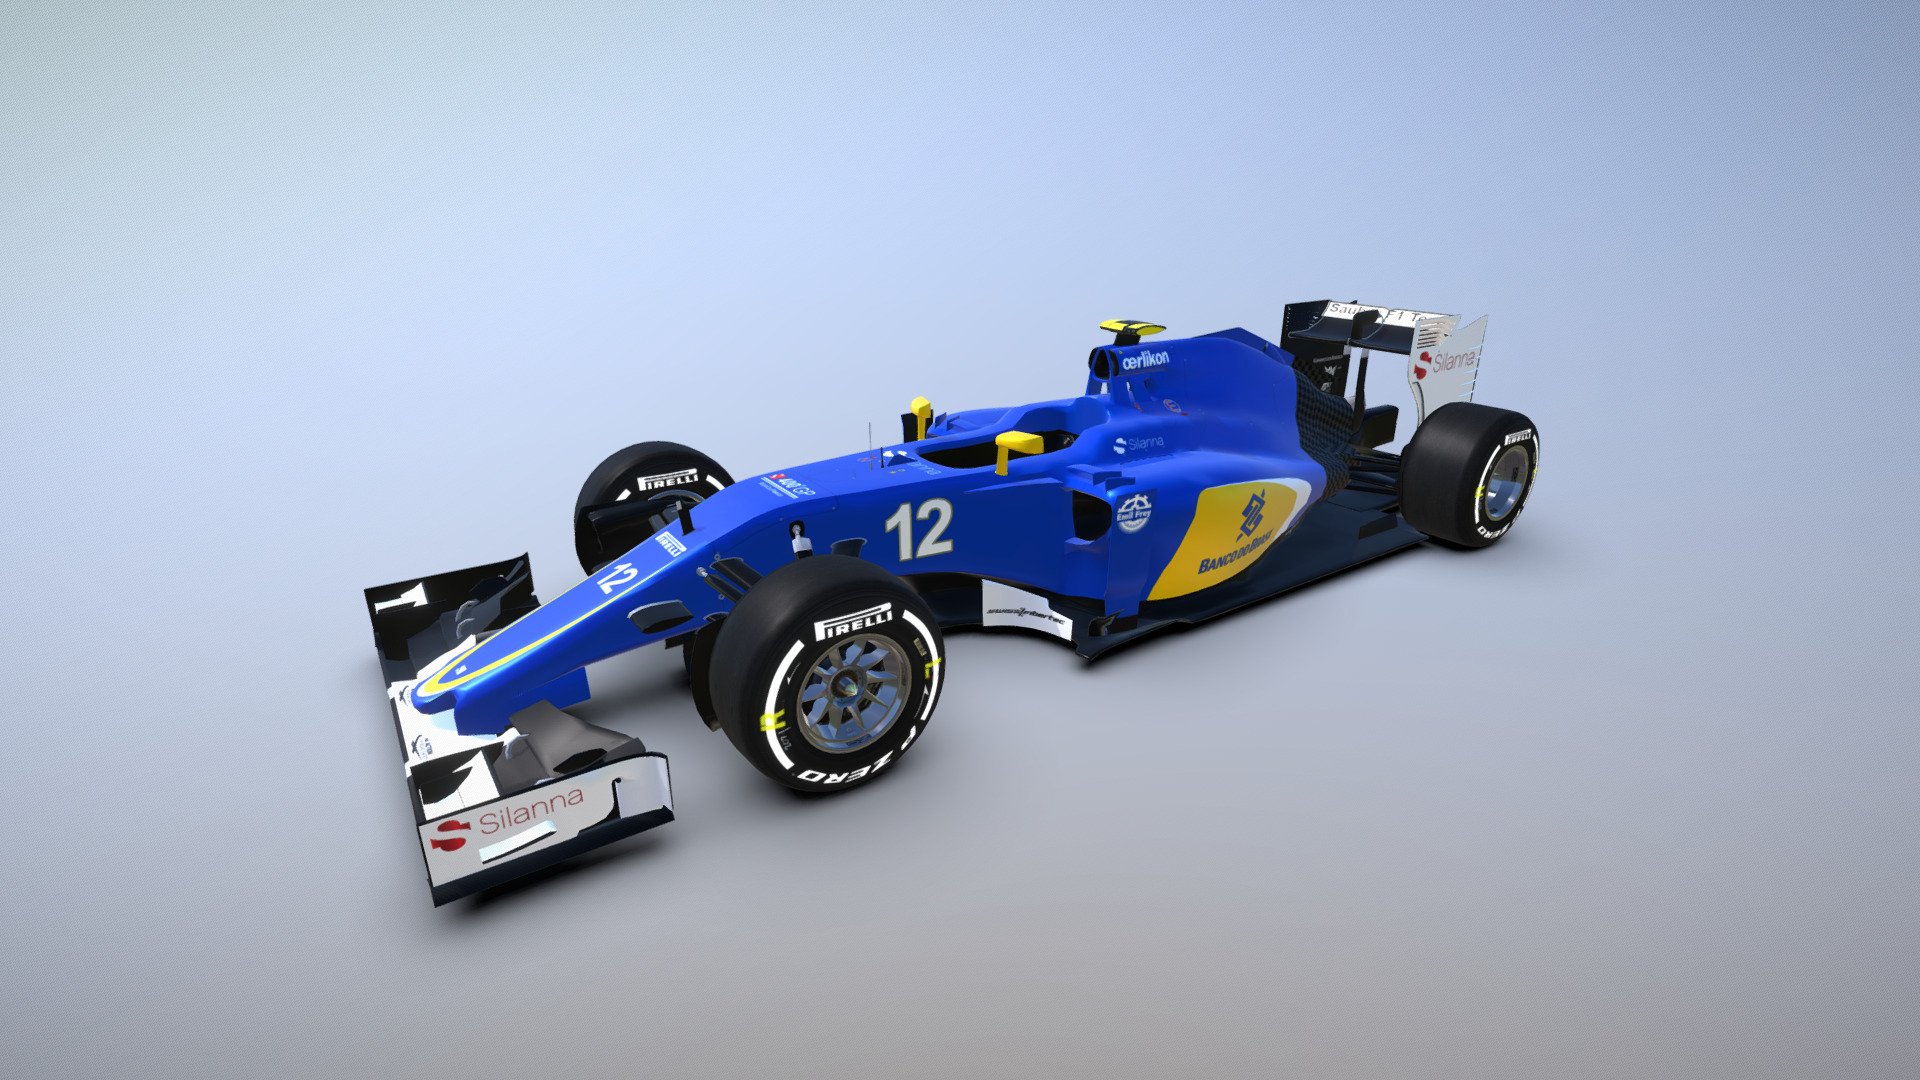 F1 Sauber C34 B (Singapore version) 3D model for grand prix 4, Austin GP livery 3d model